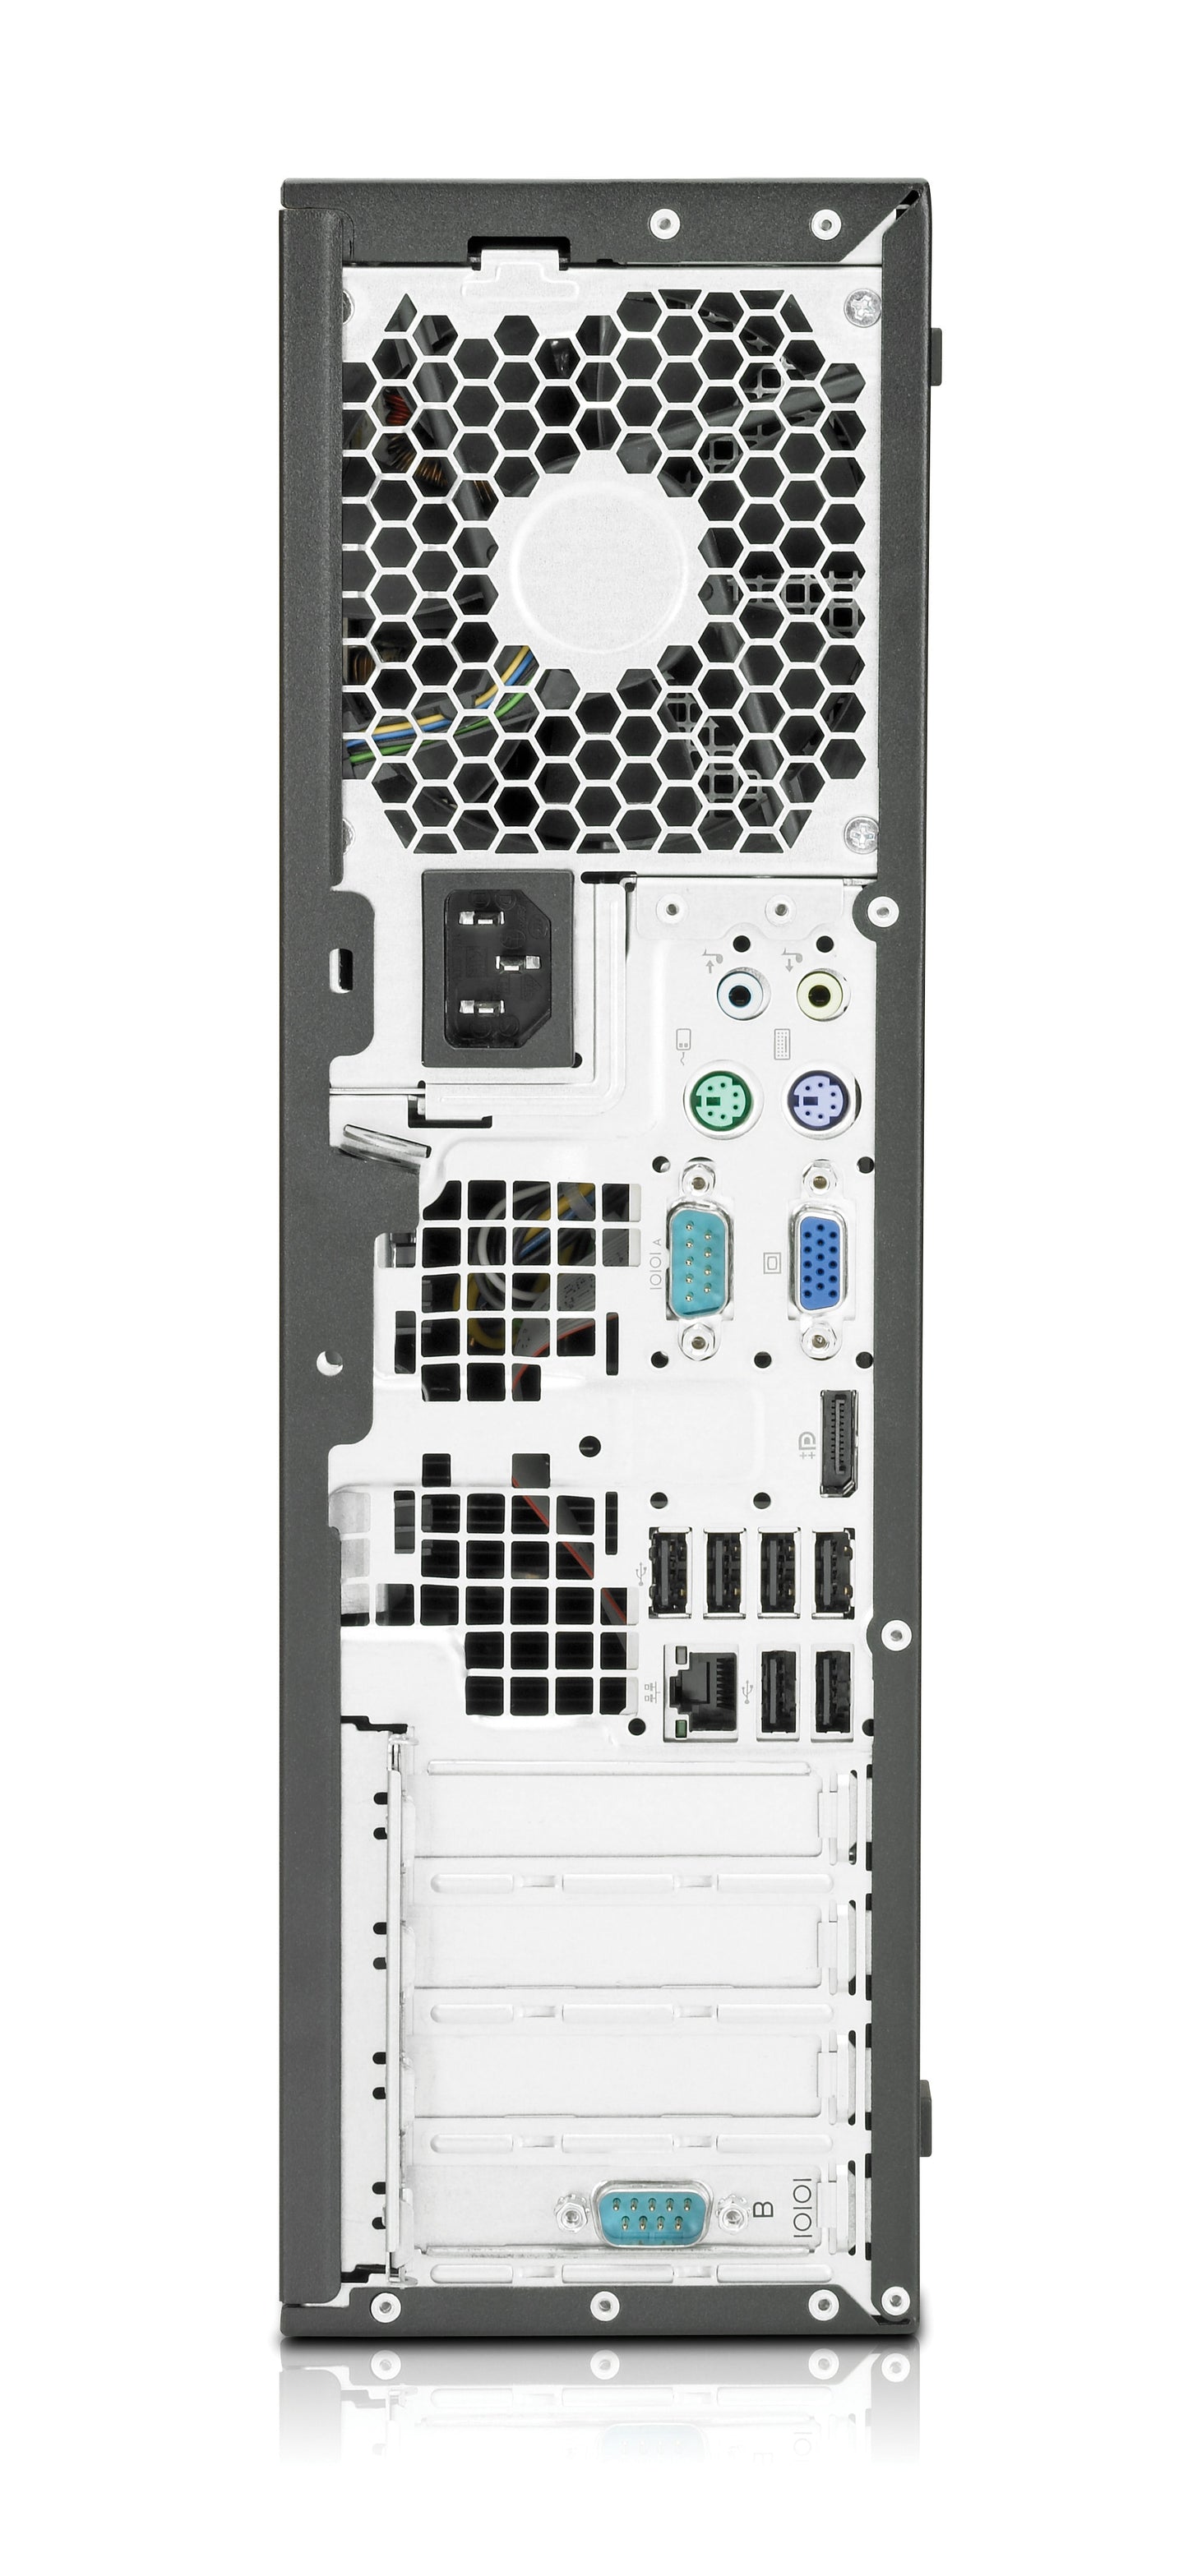 HP 6005 SFF Desktop PC - AMD Athlon II X2 B24 3Ghz - 2GB RAM - 160GB Storage- DVD